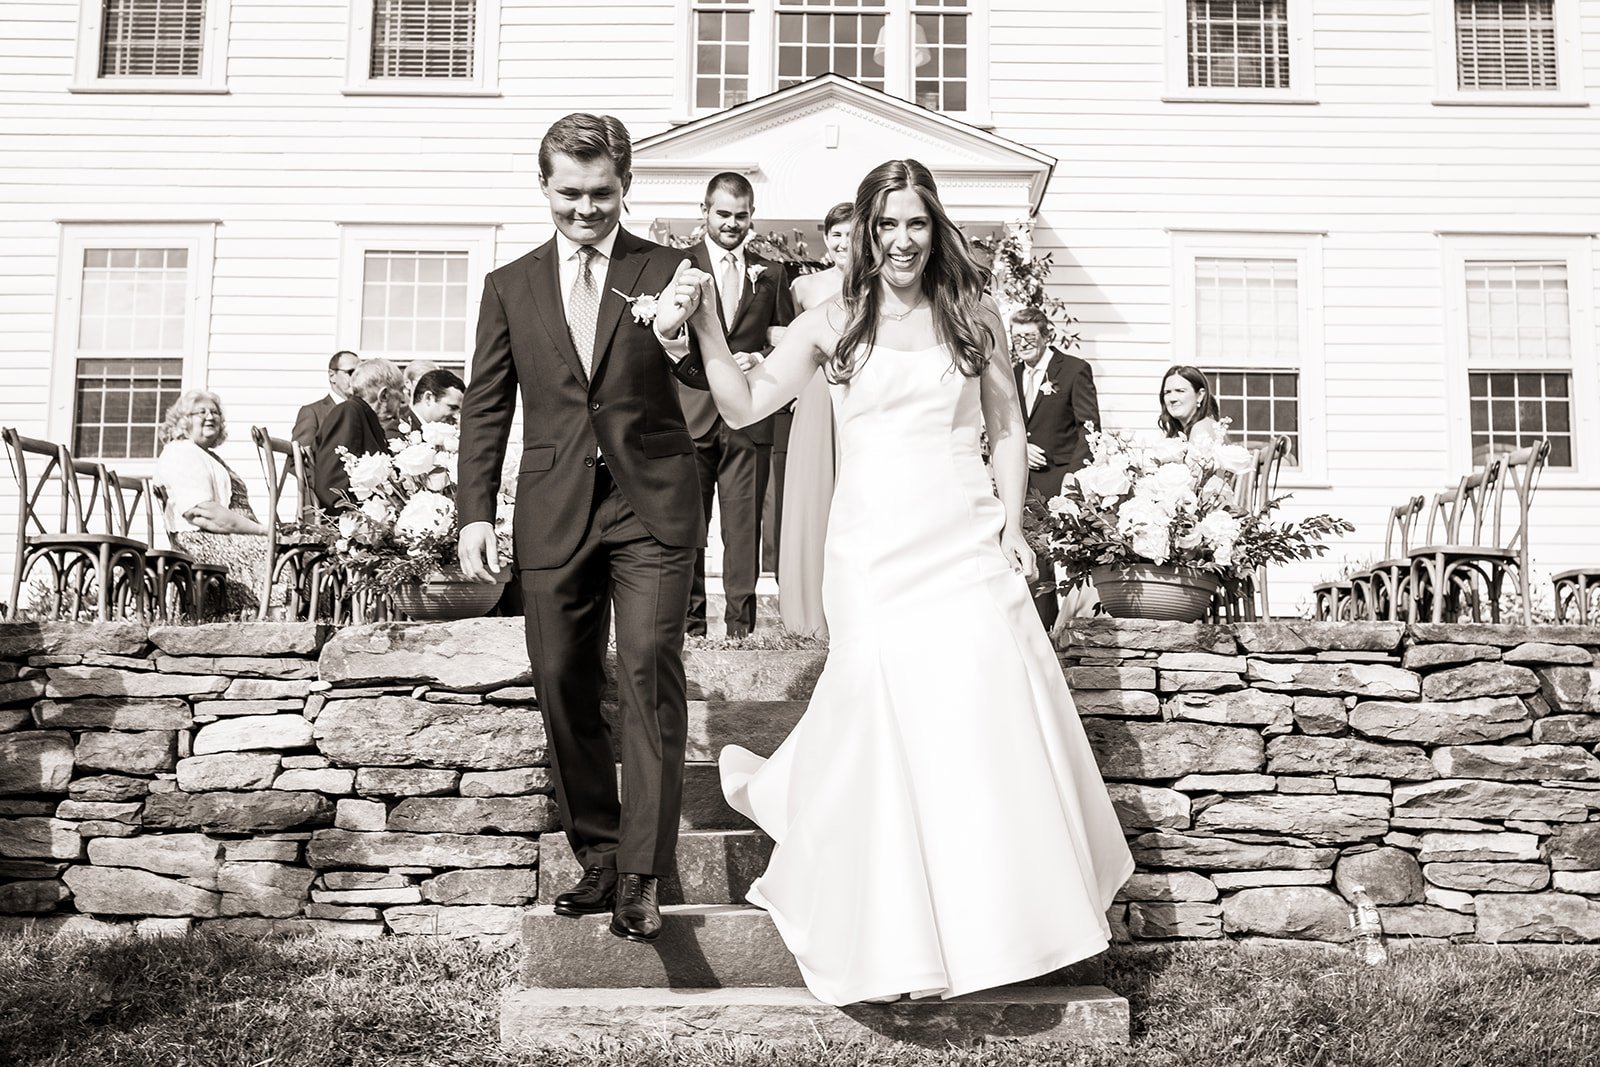 Cool-documentary-wedding-photos-ny.jpg